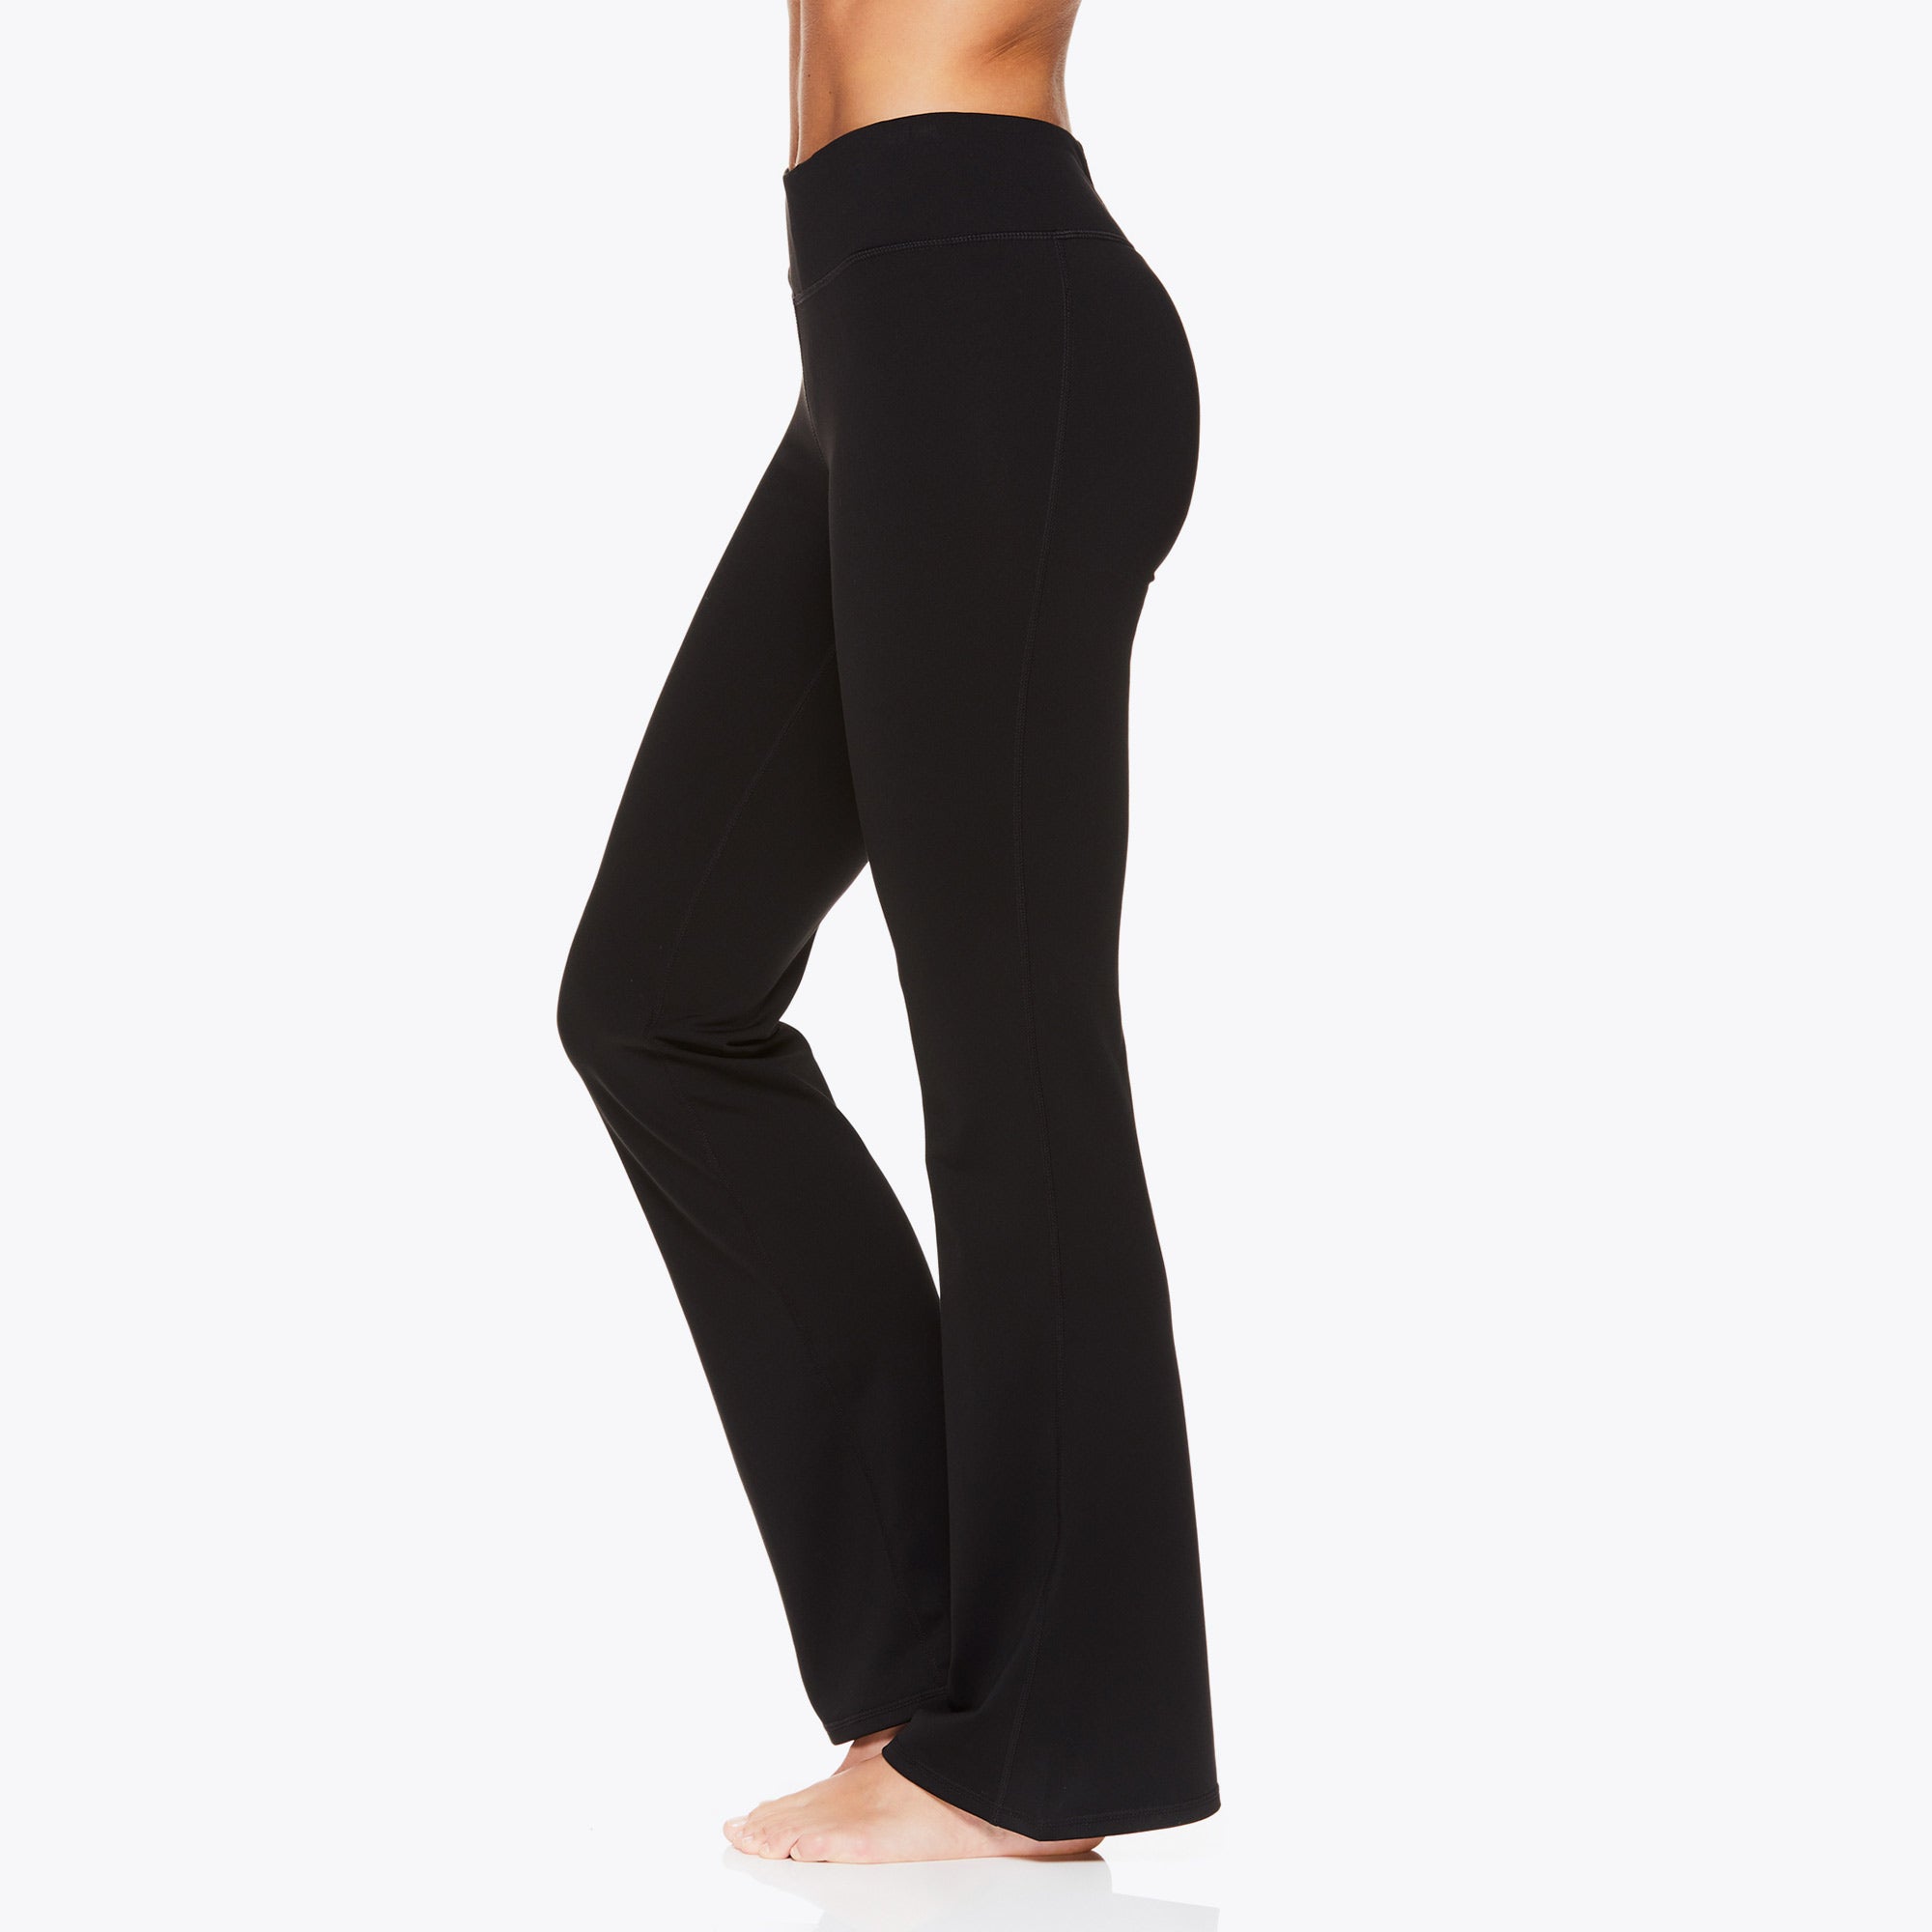 polyester spandex bootcut yoga pants